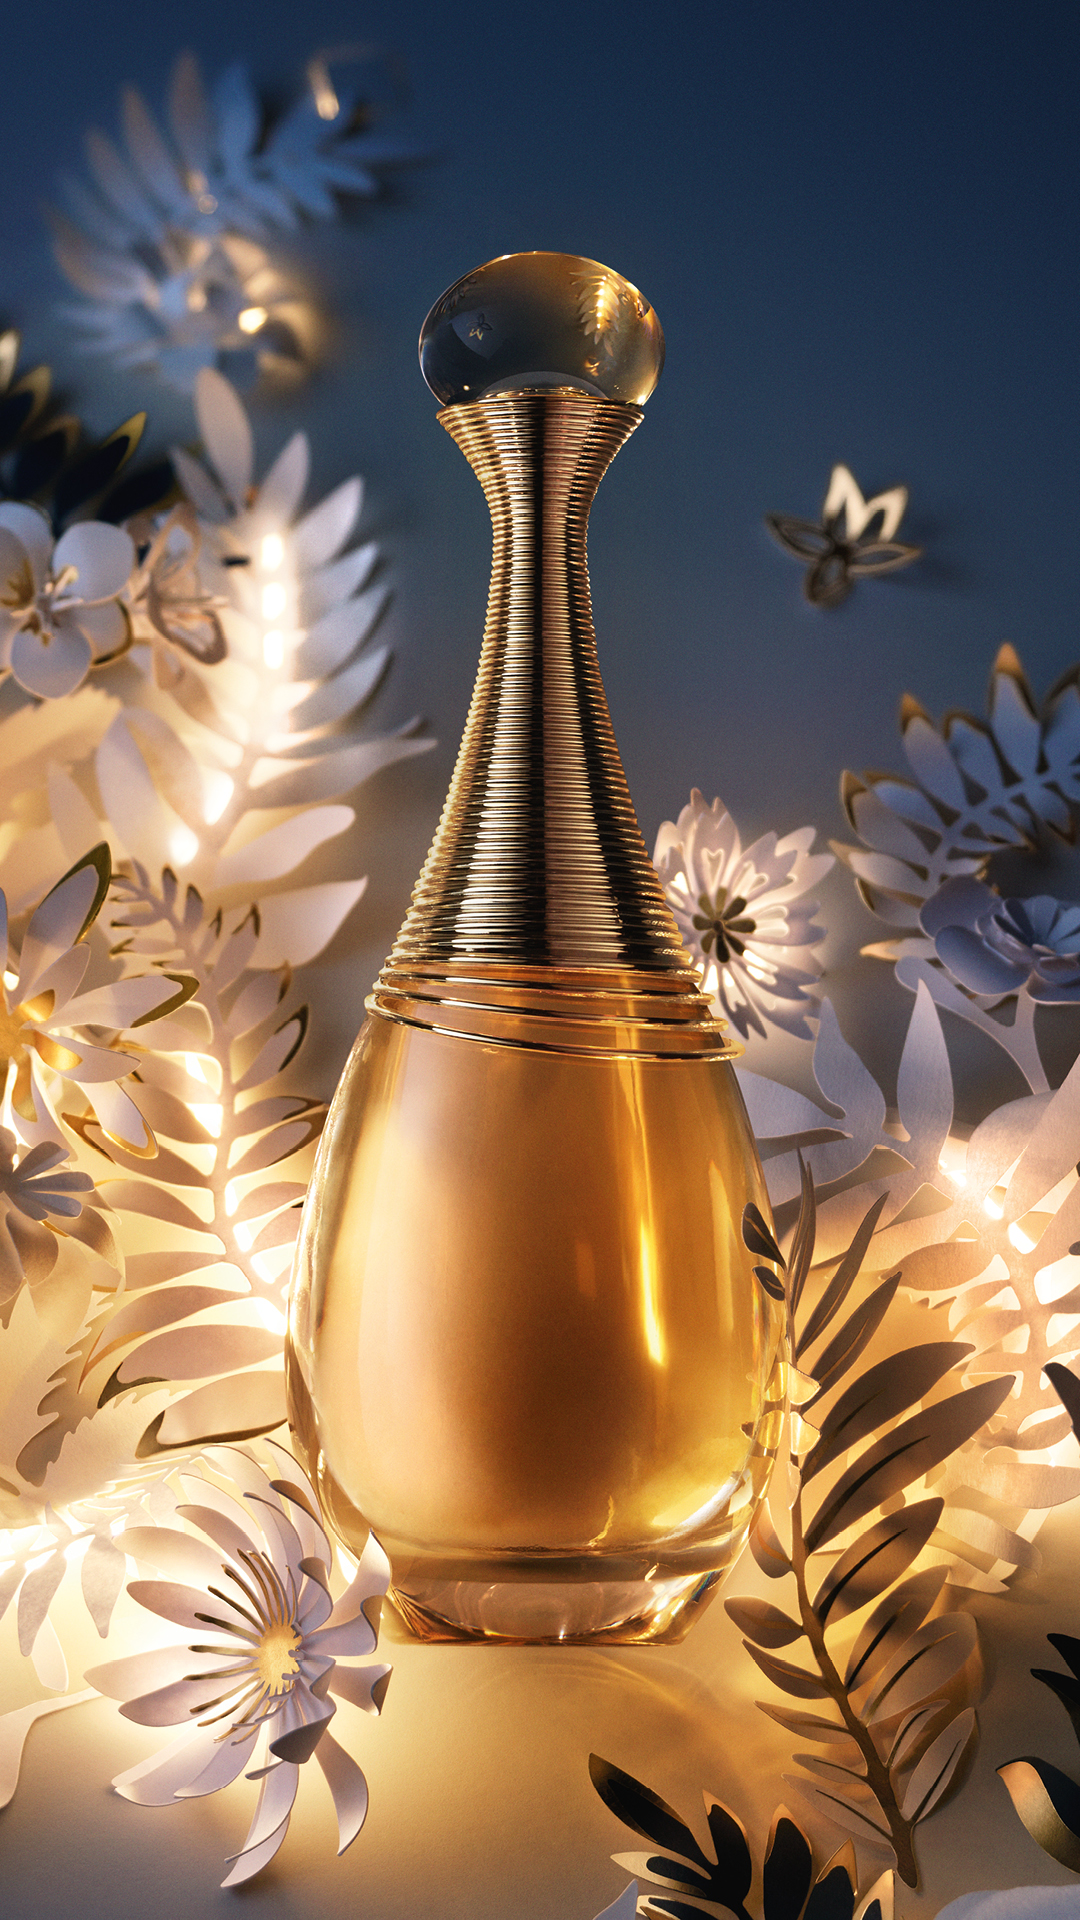 Dior’s New Perfume Smells As Divine As It Looks | Harper's Bazaar Arabia